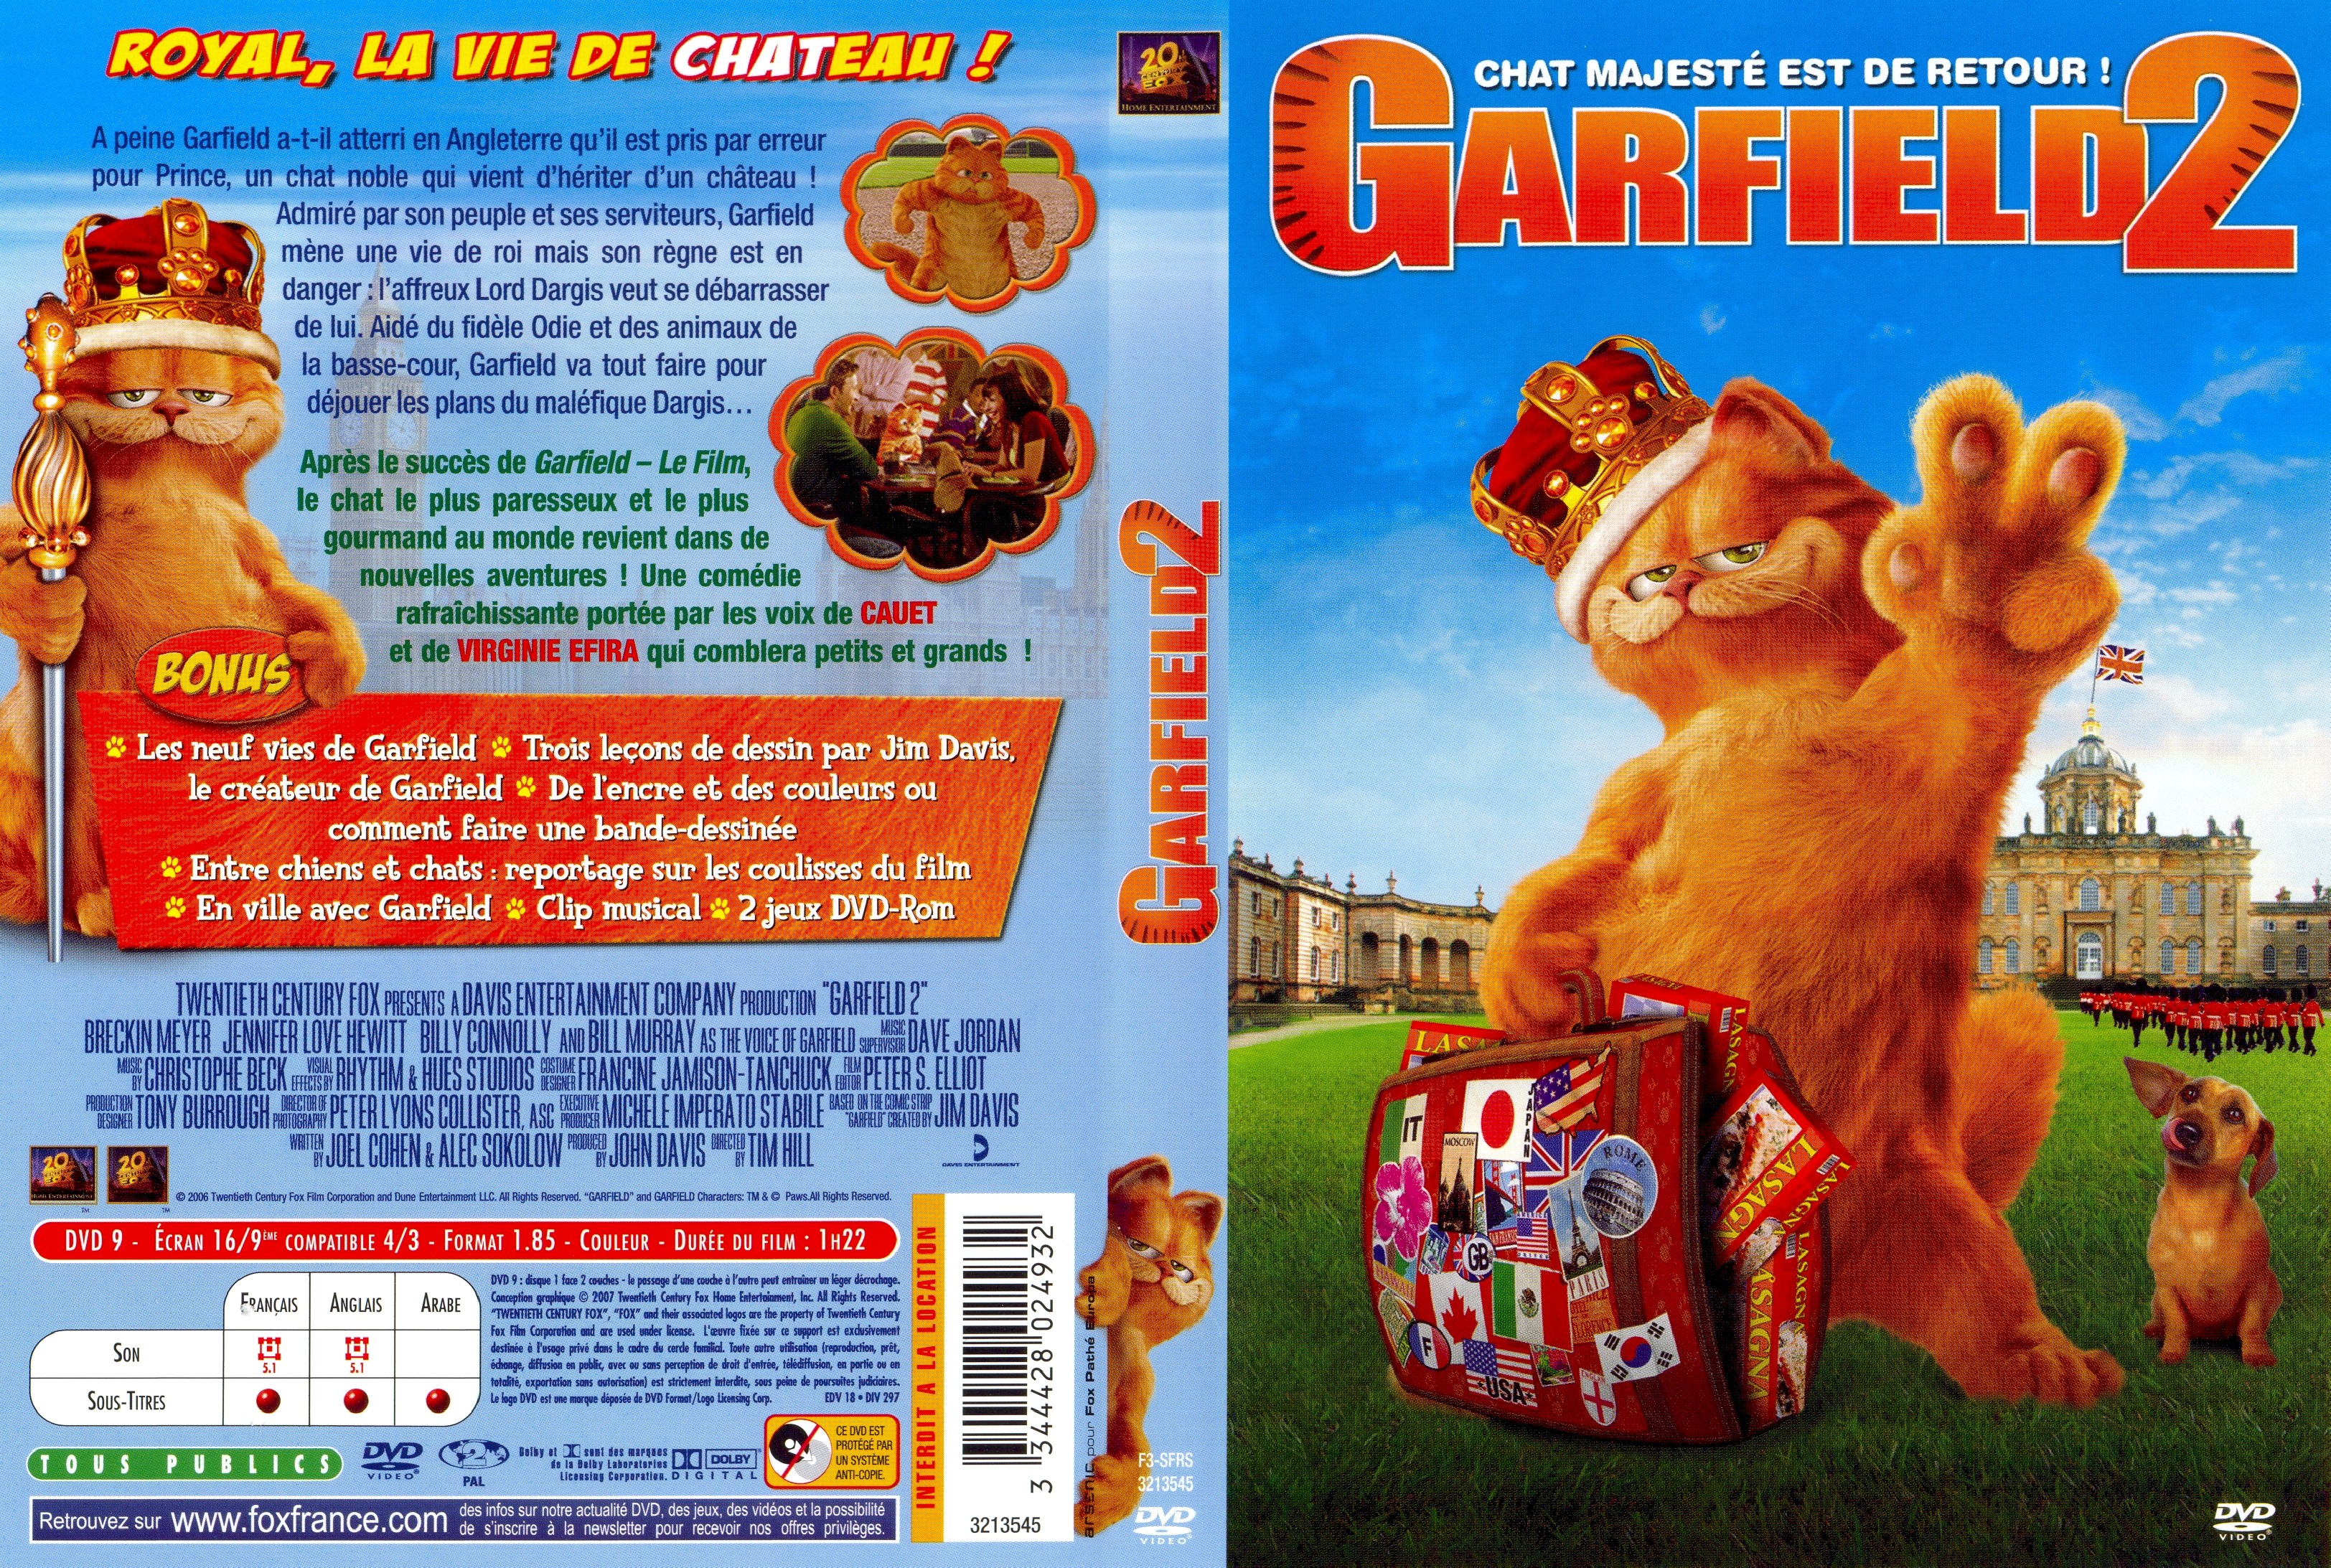 Jaquette DVD Garfield 2 v3